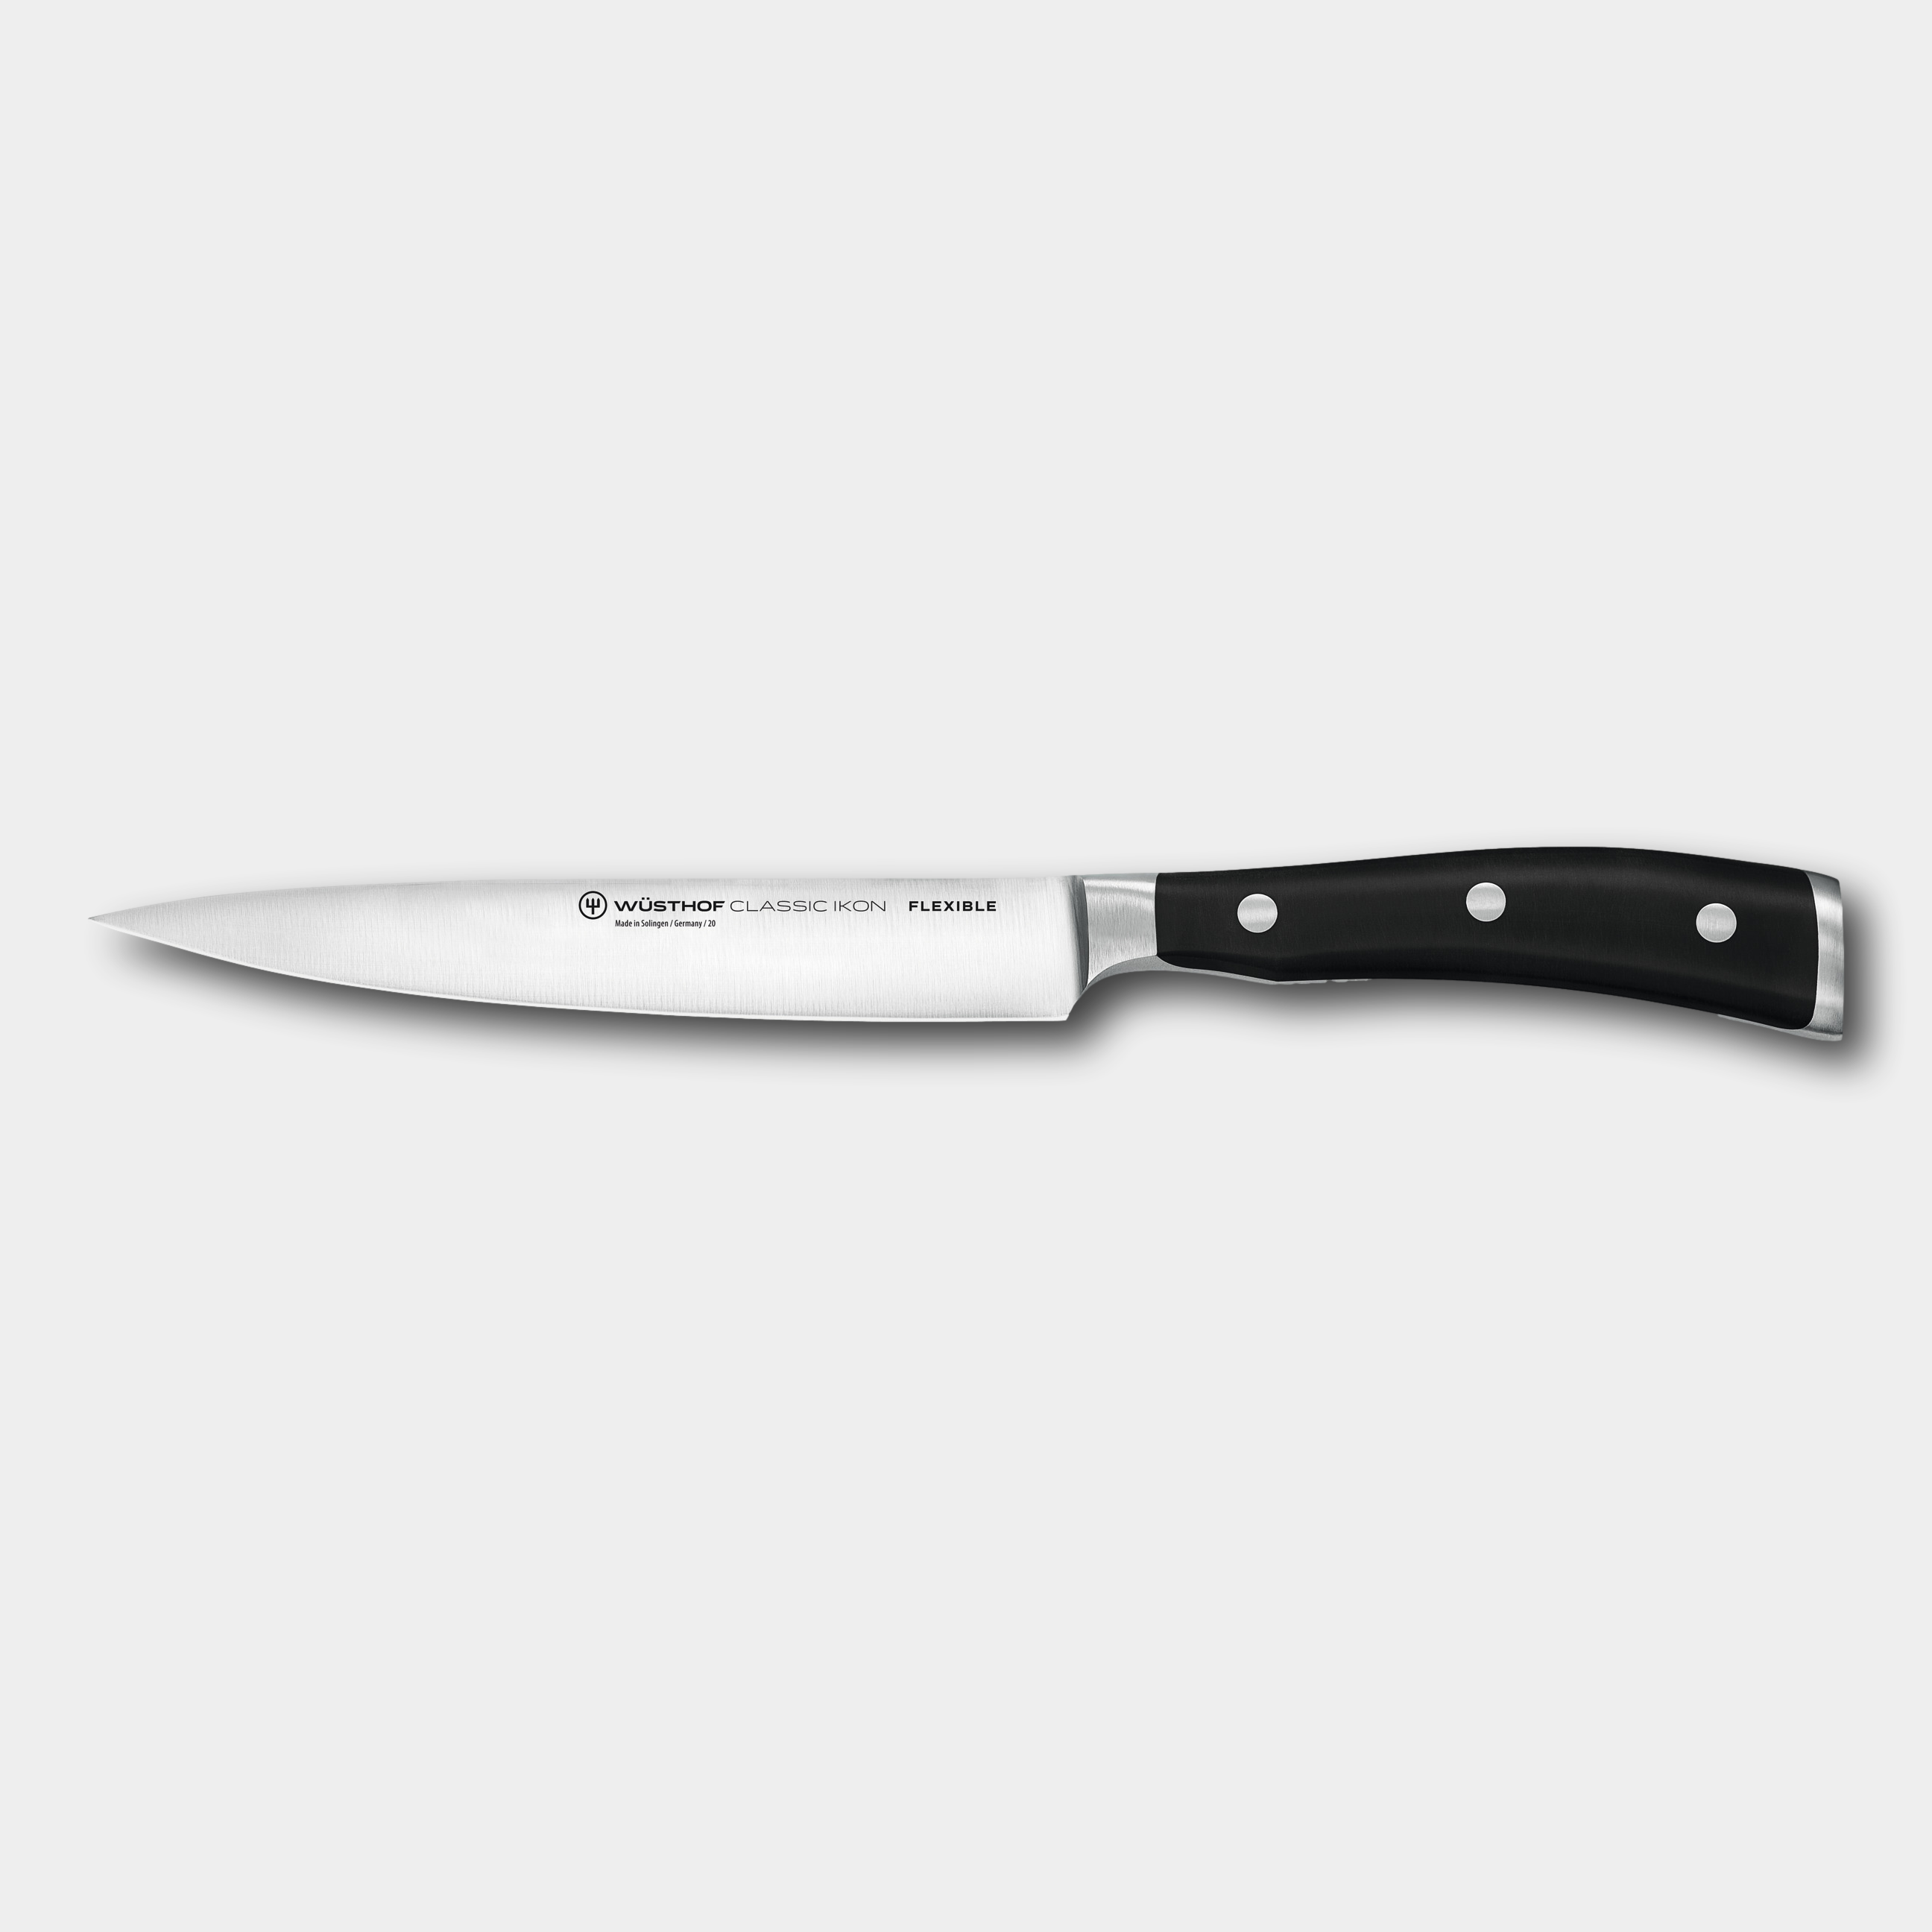 Wusthof Classic IKON 16cm Flexible Fillet Knife